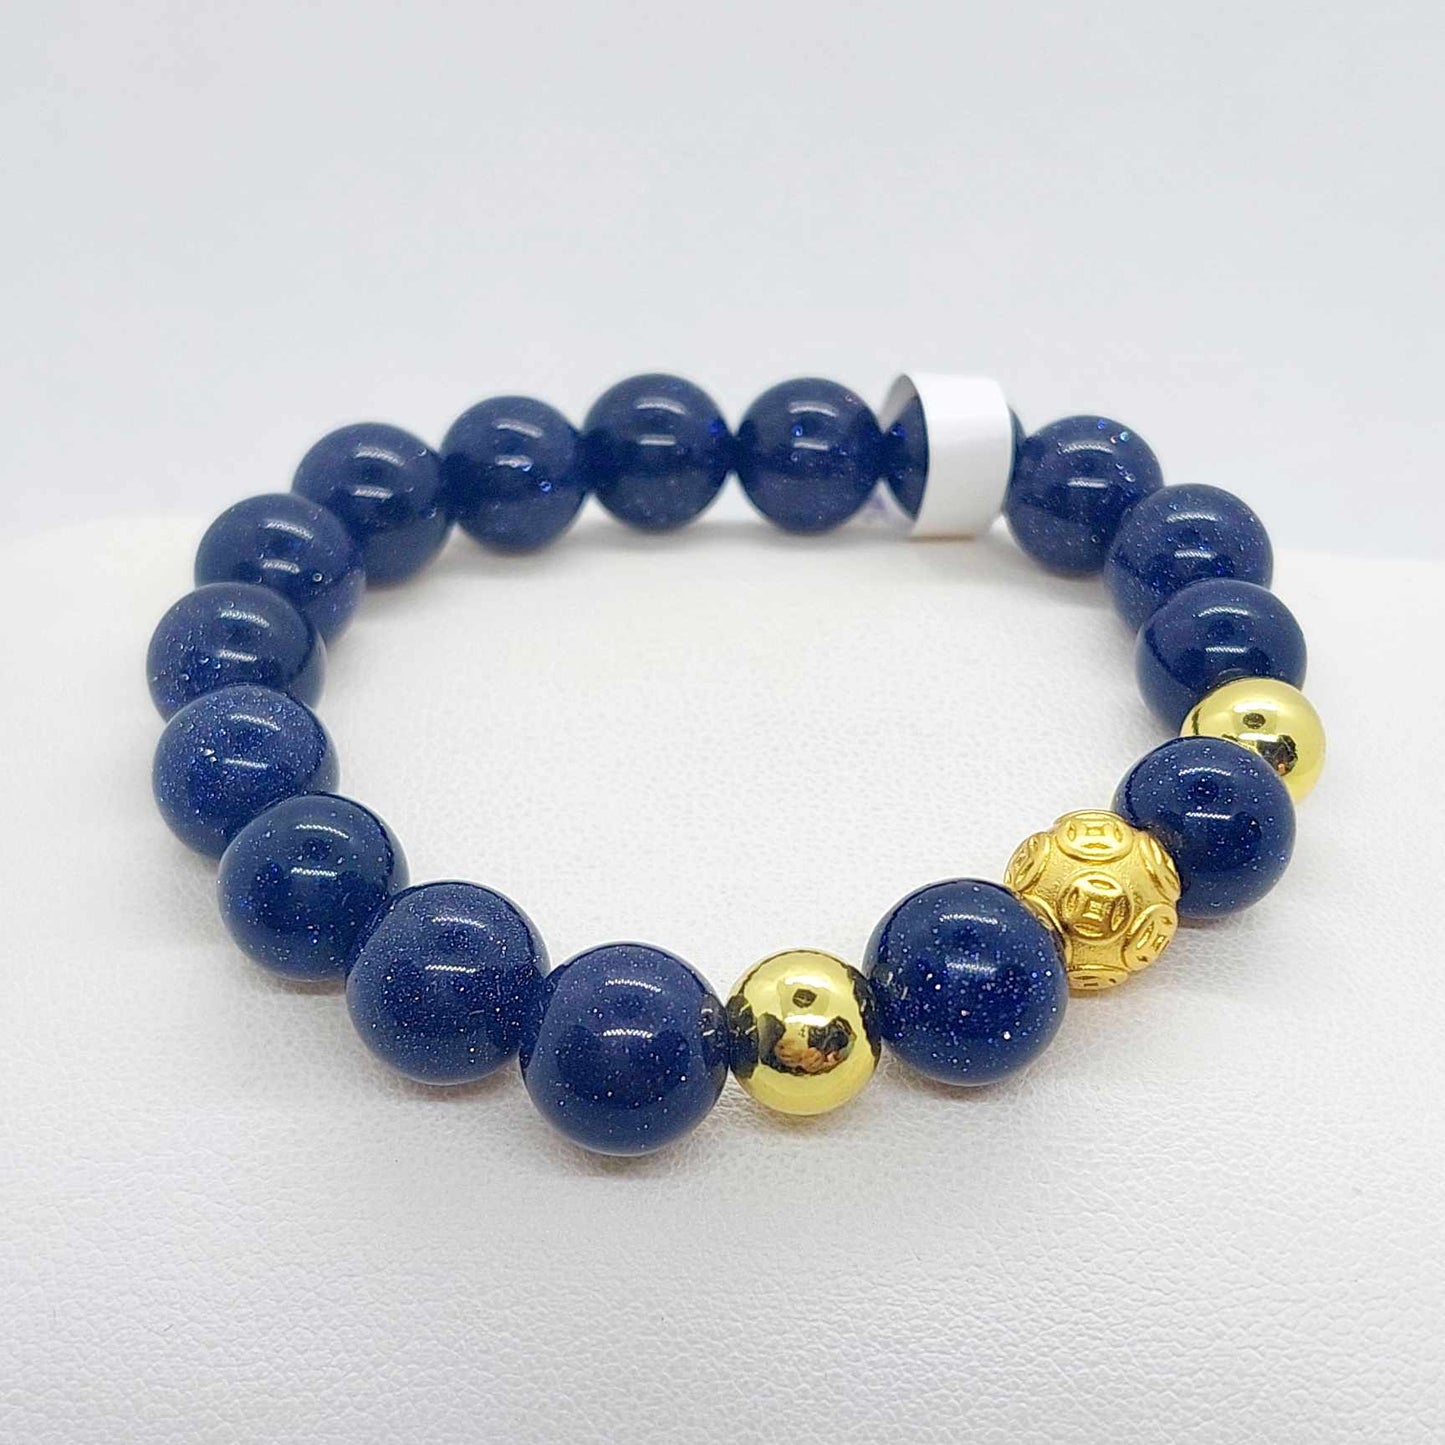 Blue Goldstone Bracelet in 10mm Stones